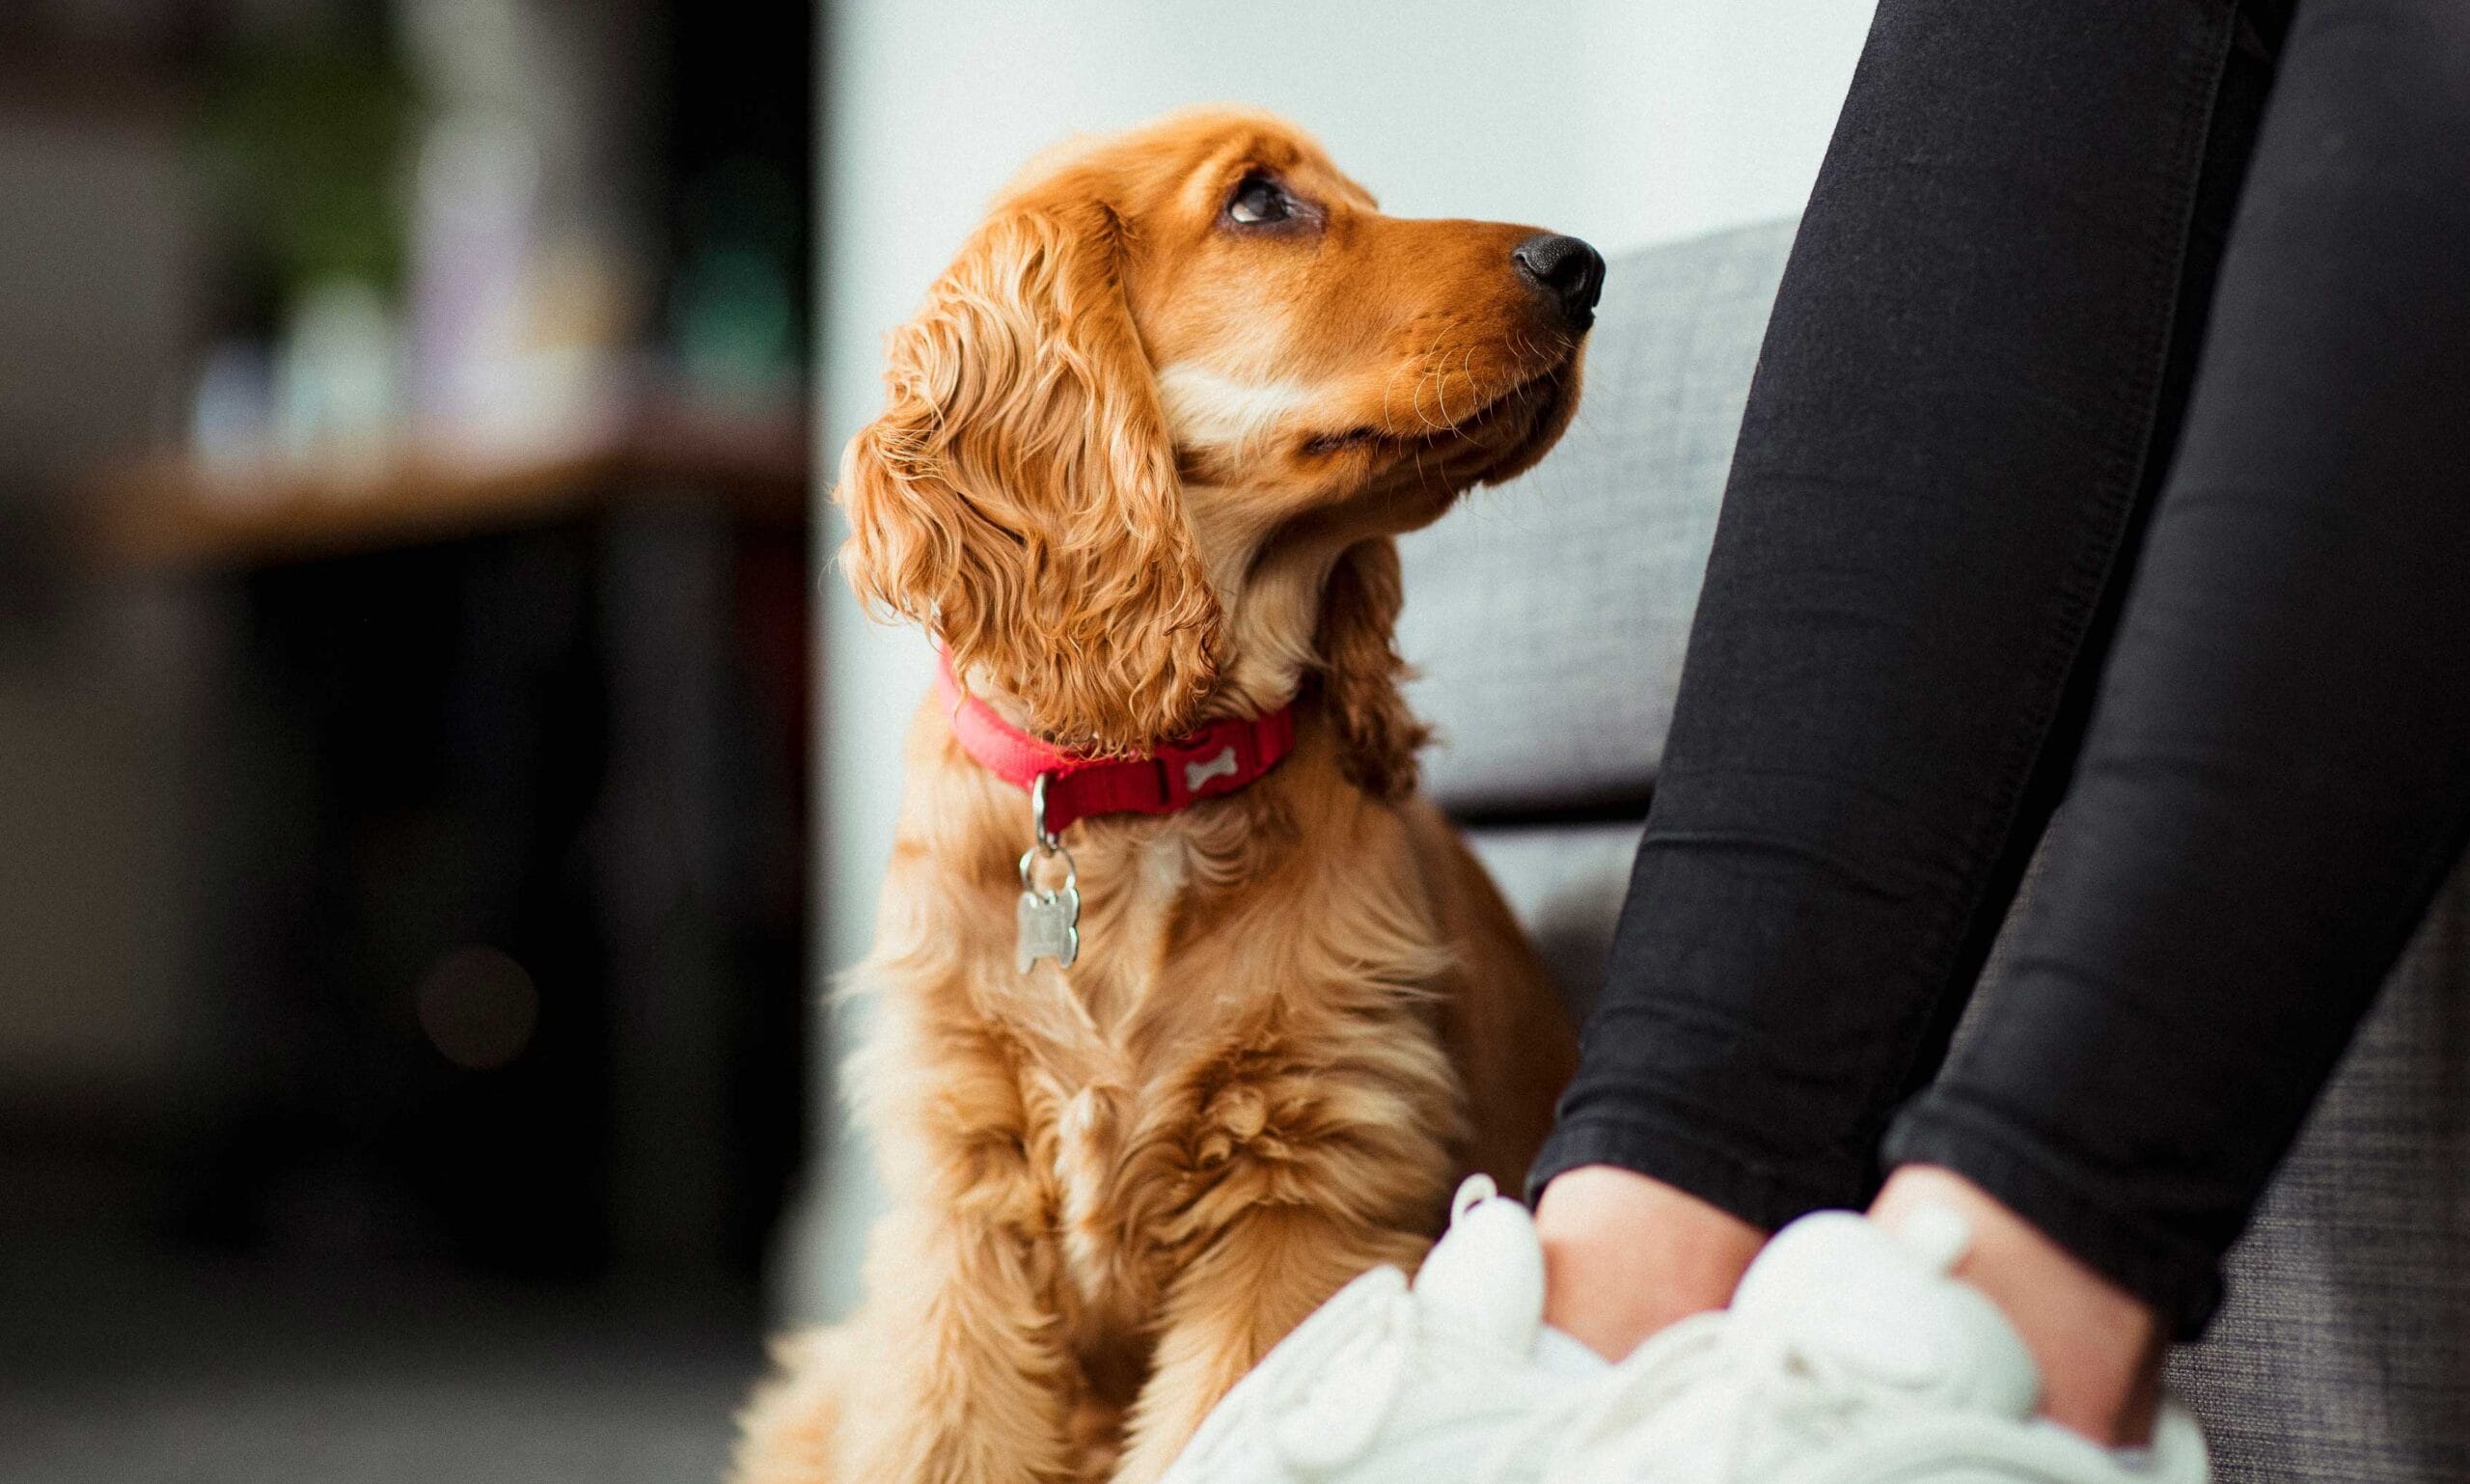 Balancing your dog's mental & physical stimulation